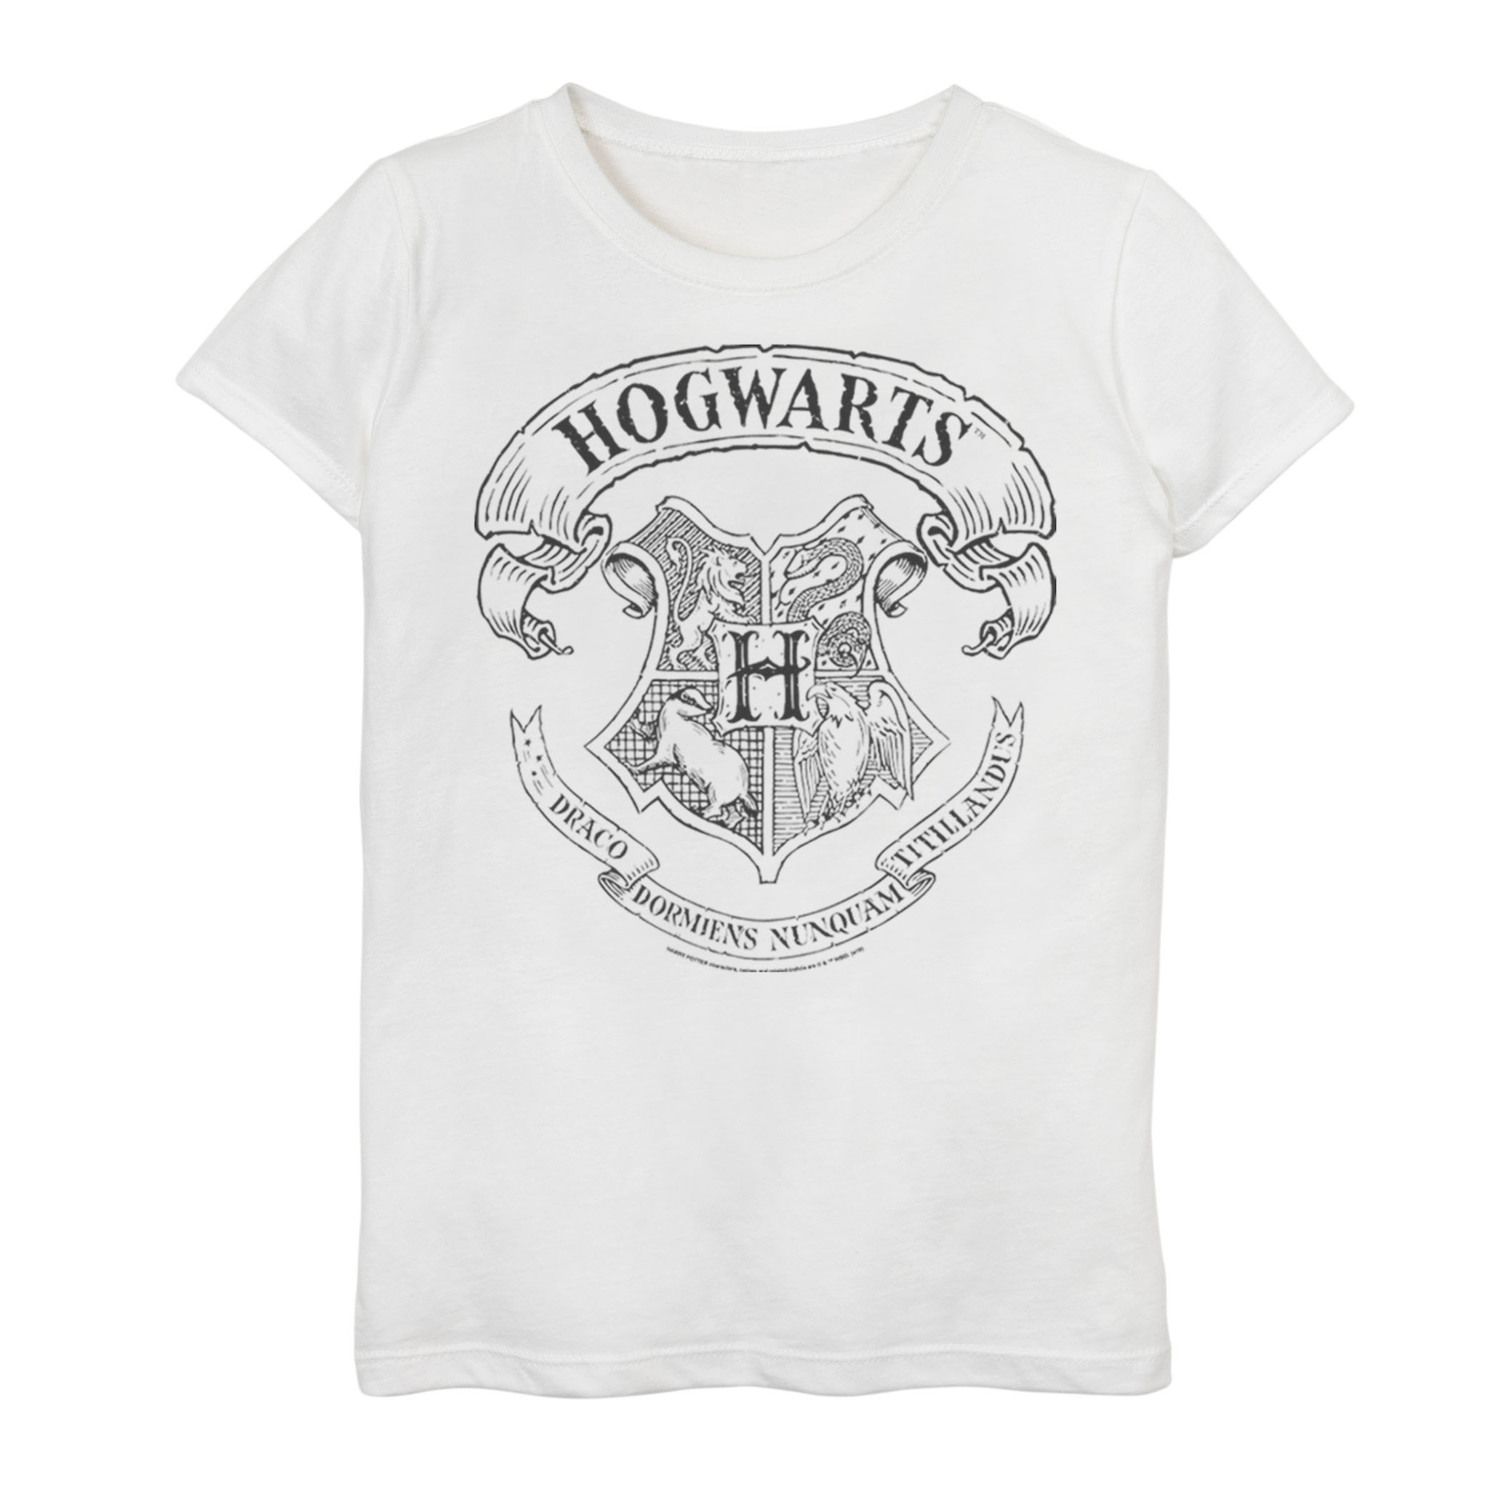 Image for Harry Potter Girls 7-16 Simple Hogwarts Crest Outline Graphic Tee at Kohl's.